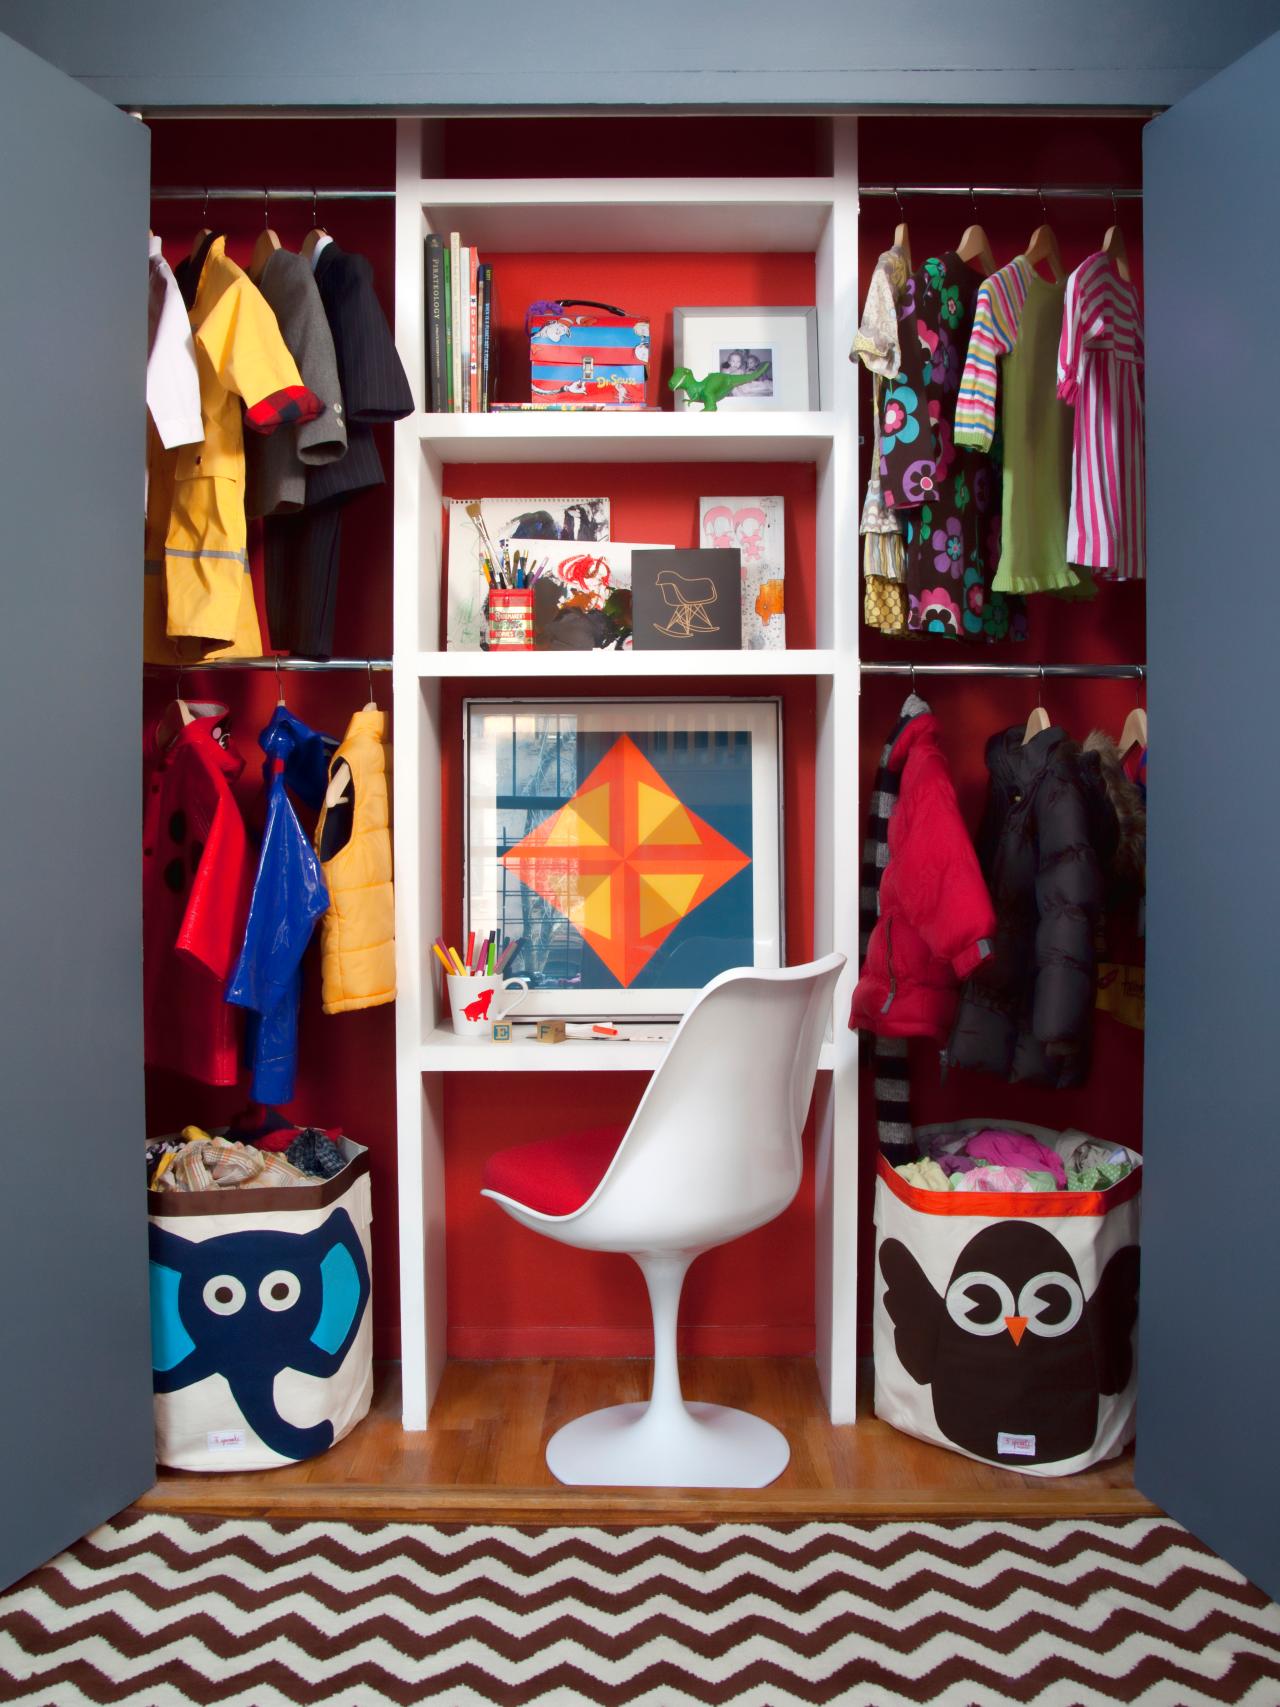 20 Modern Kids Bedroom Organization Ideas - Craftionary